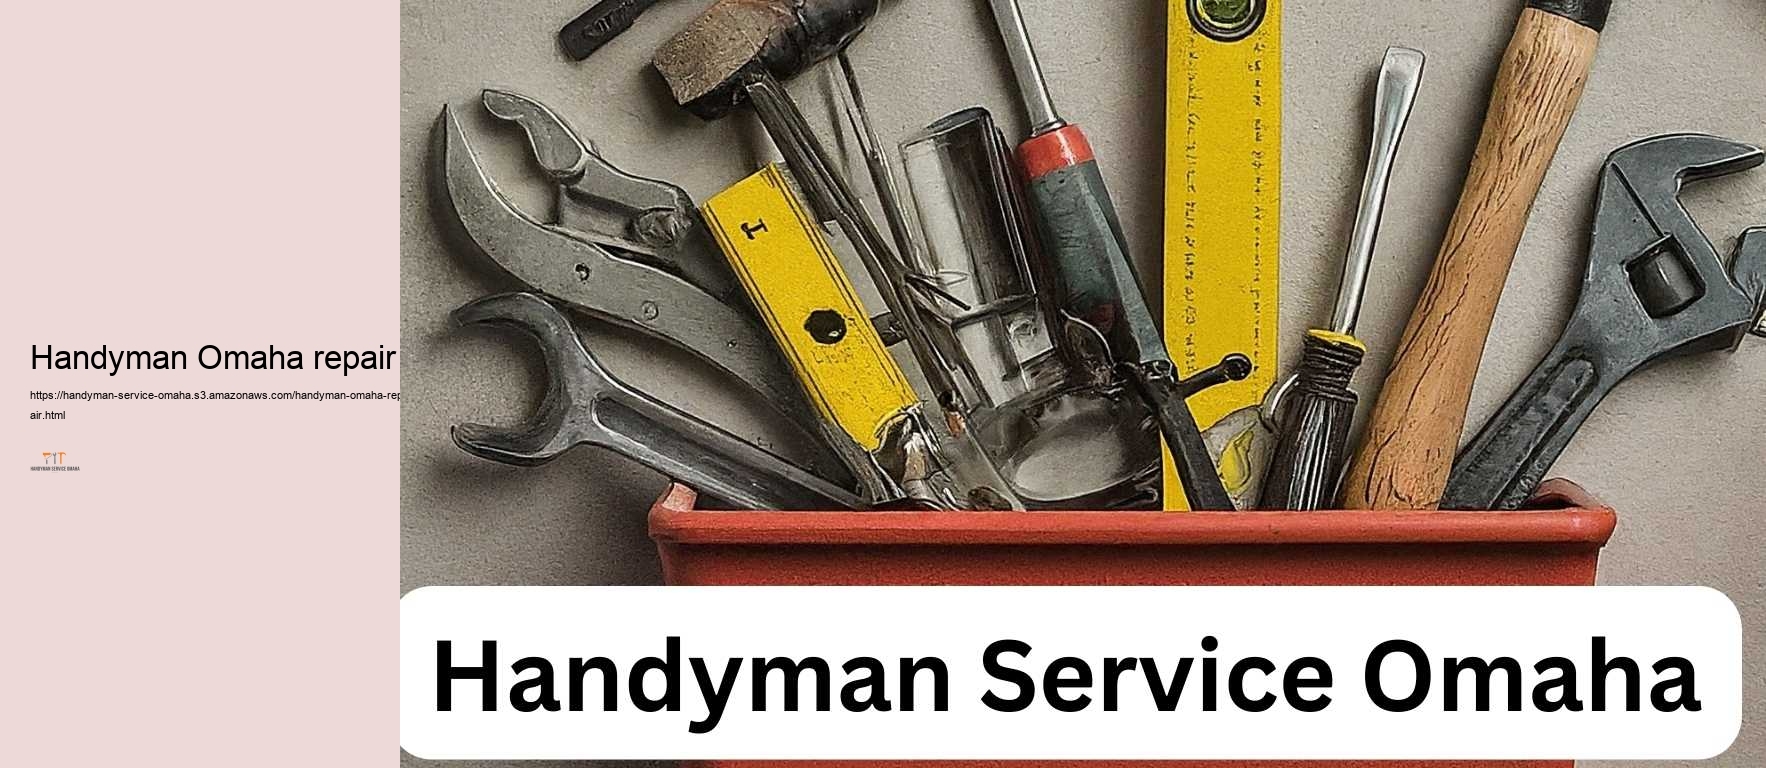 Handyman Omaha repair